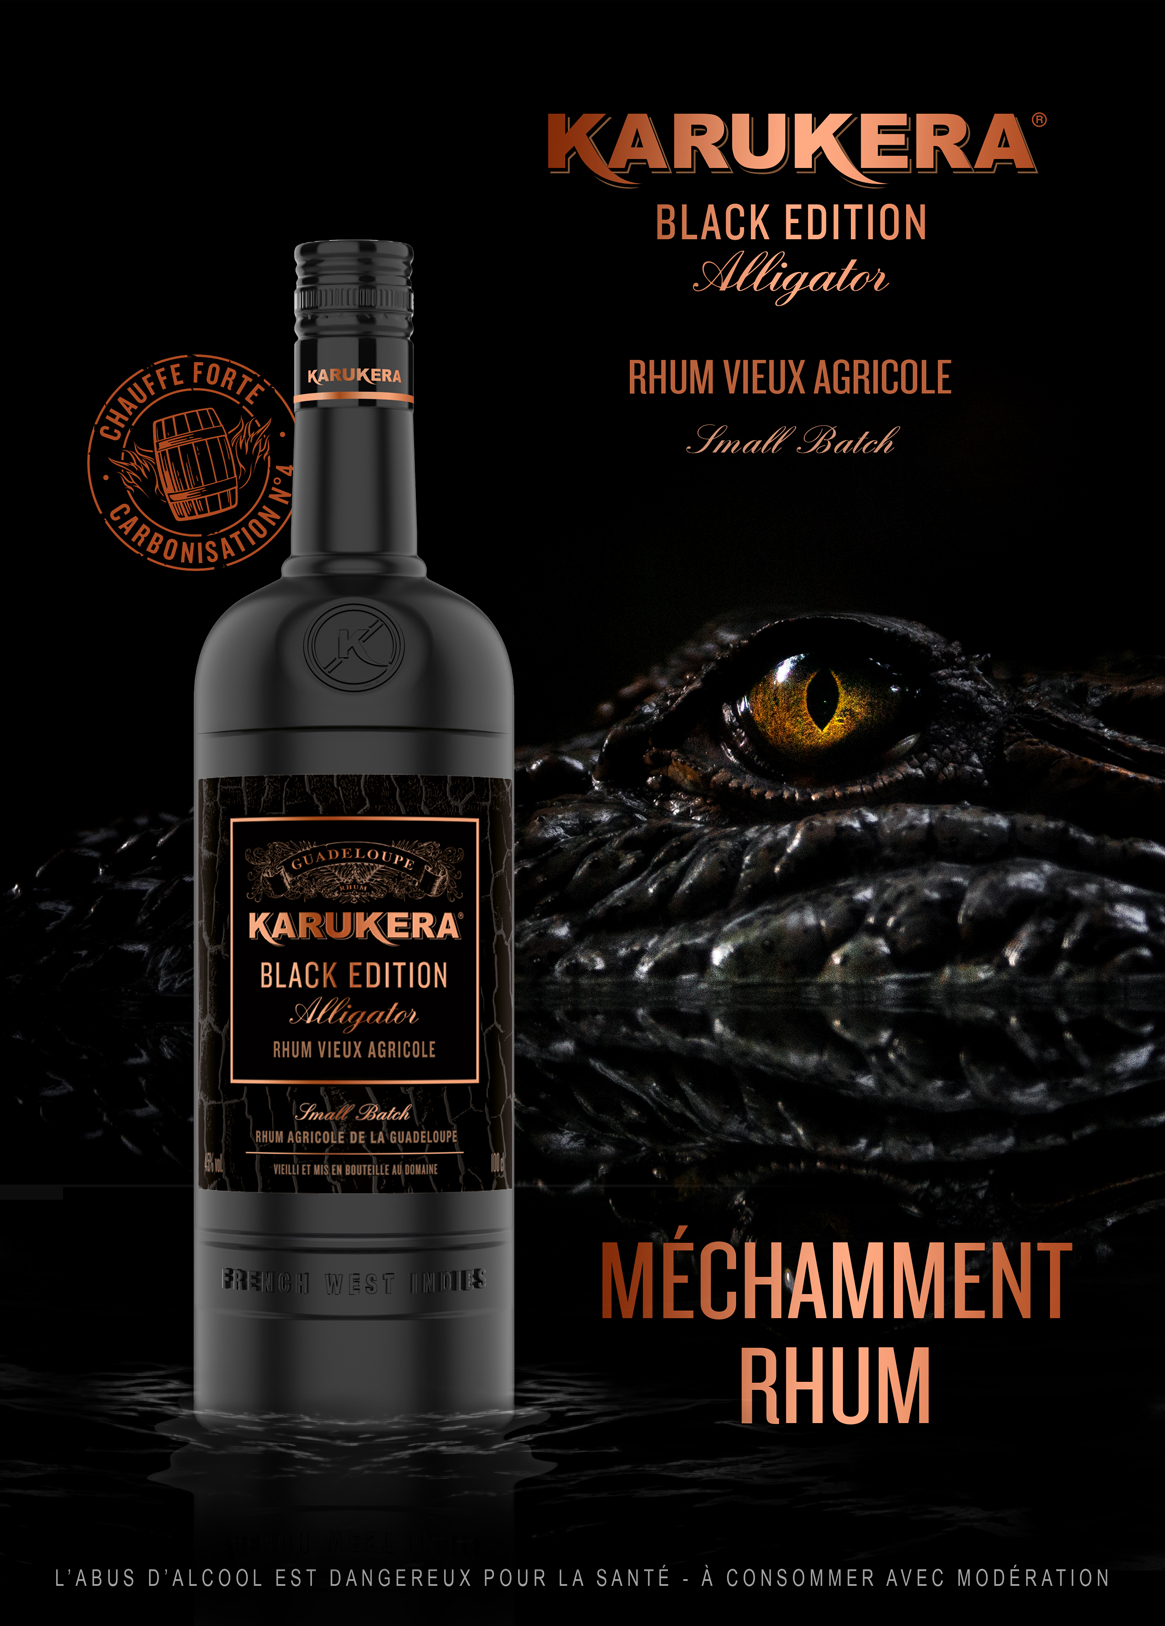 Karukera Black Edition Alligator